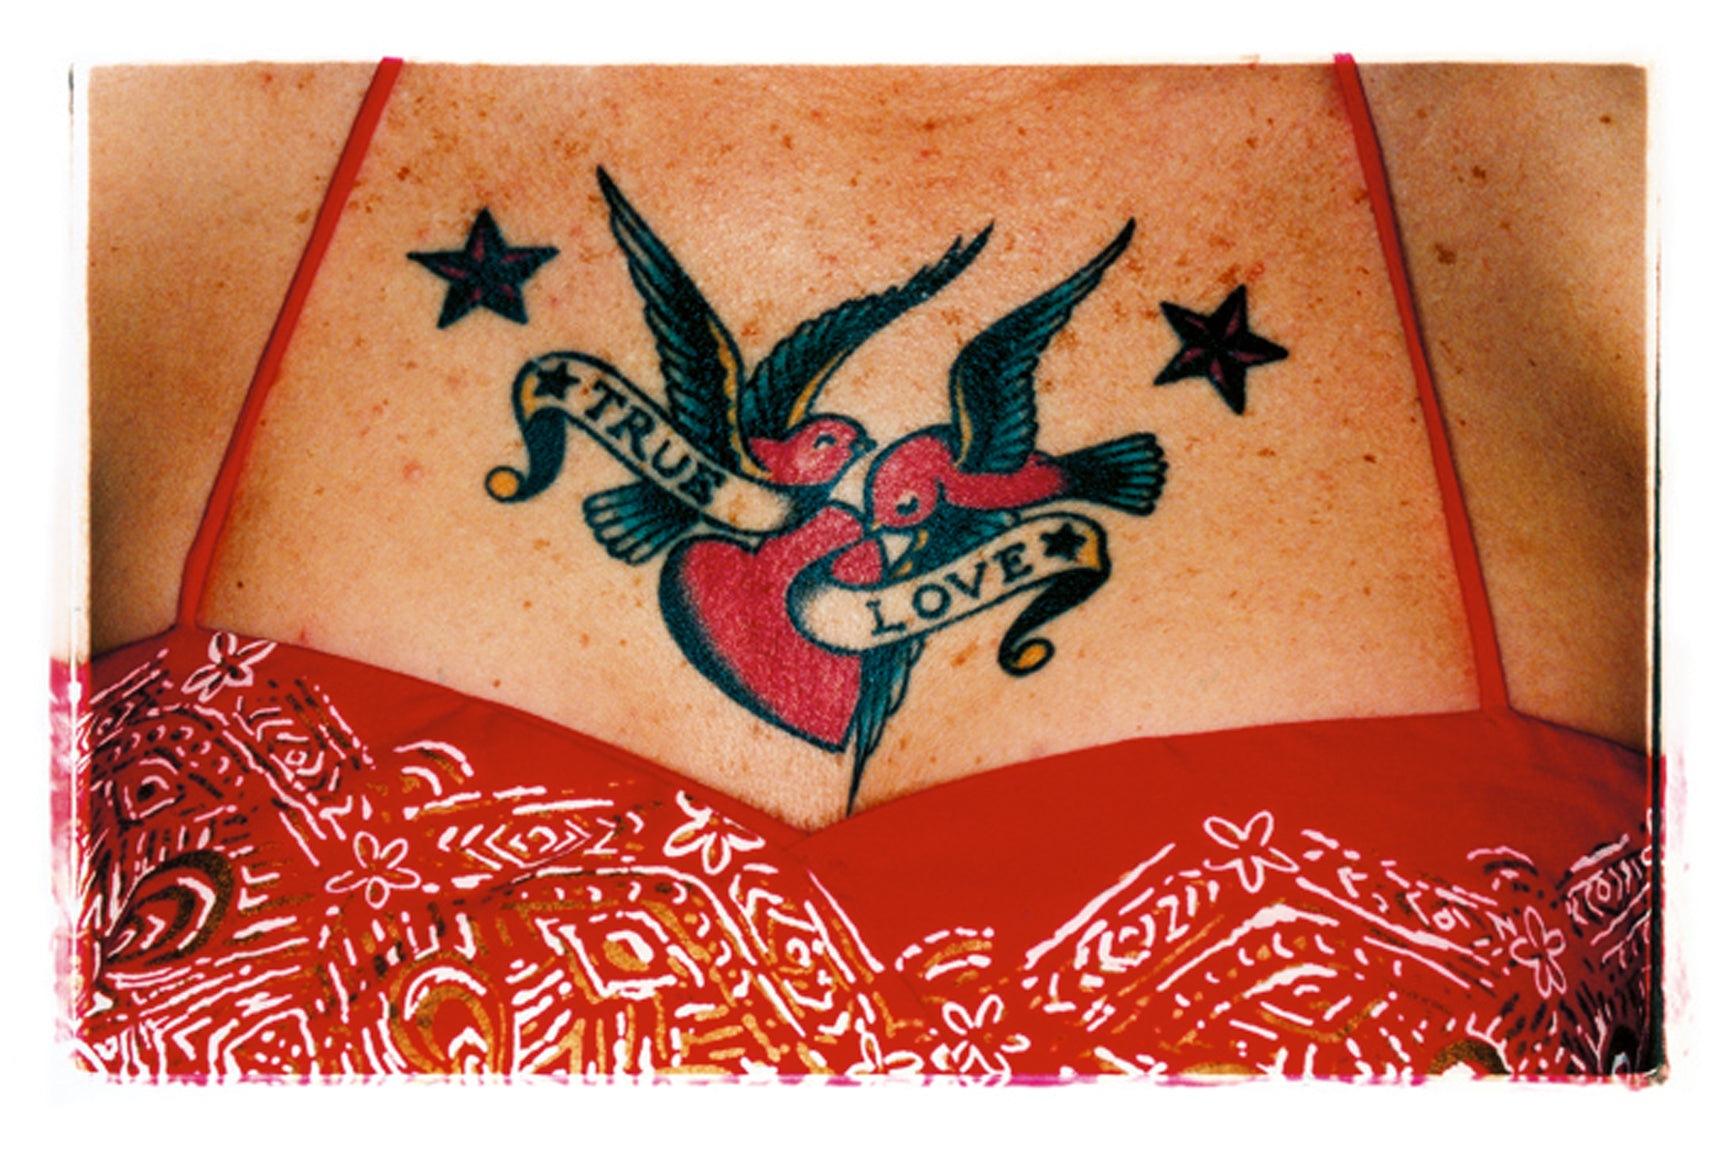 Love birds chest tattoo photograph.